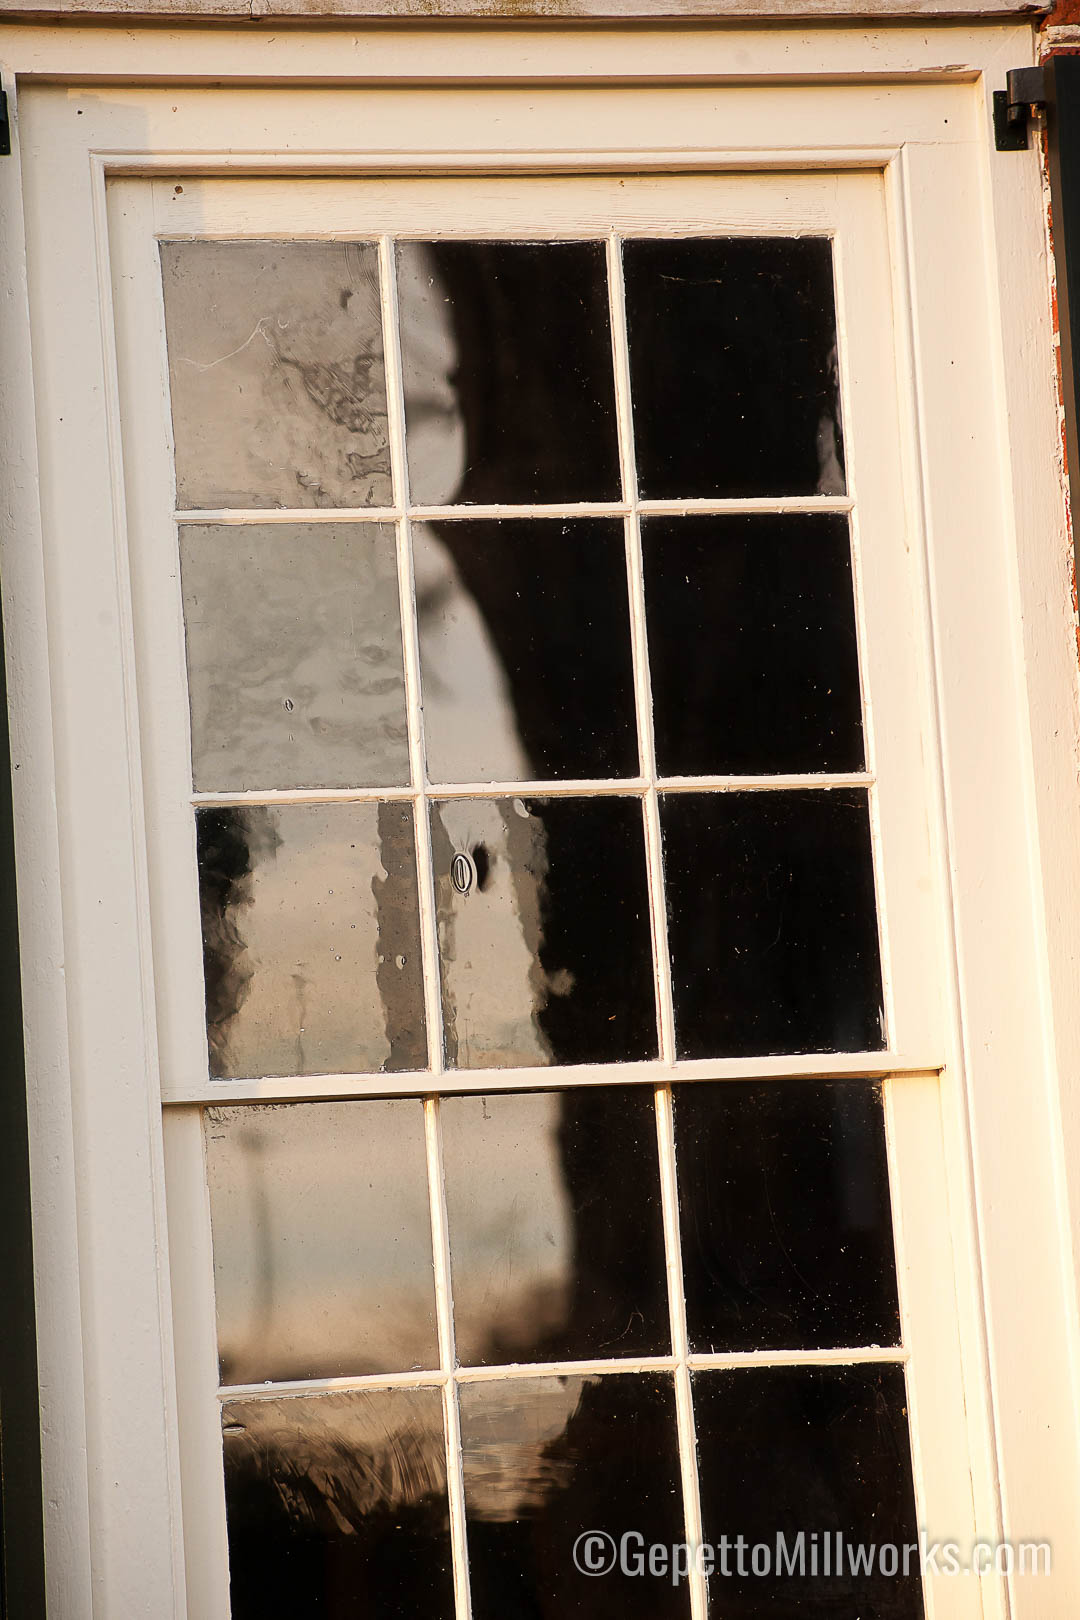 South Carolina Wooden Window Supplier